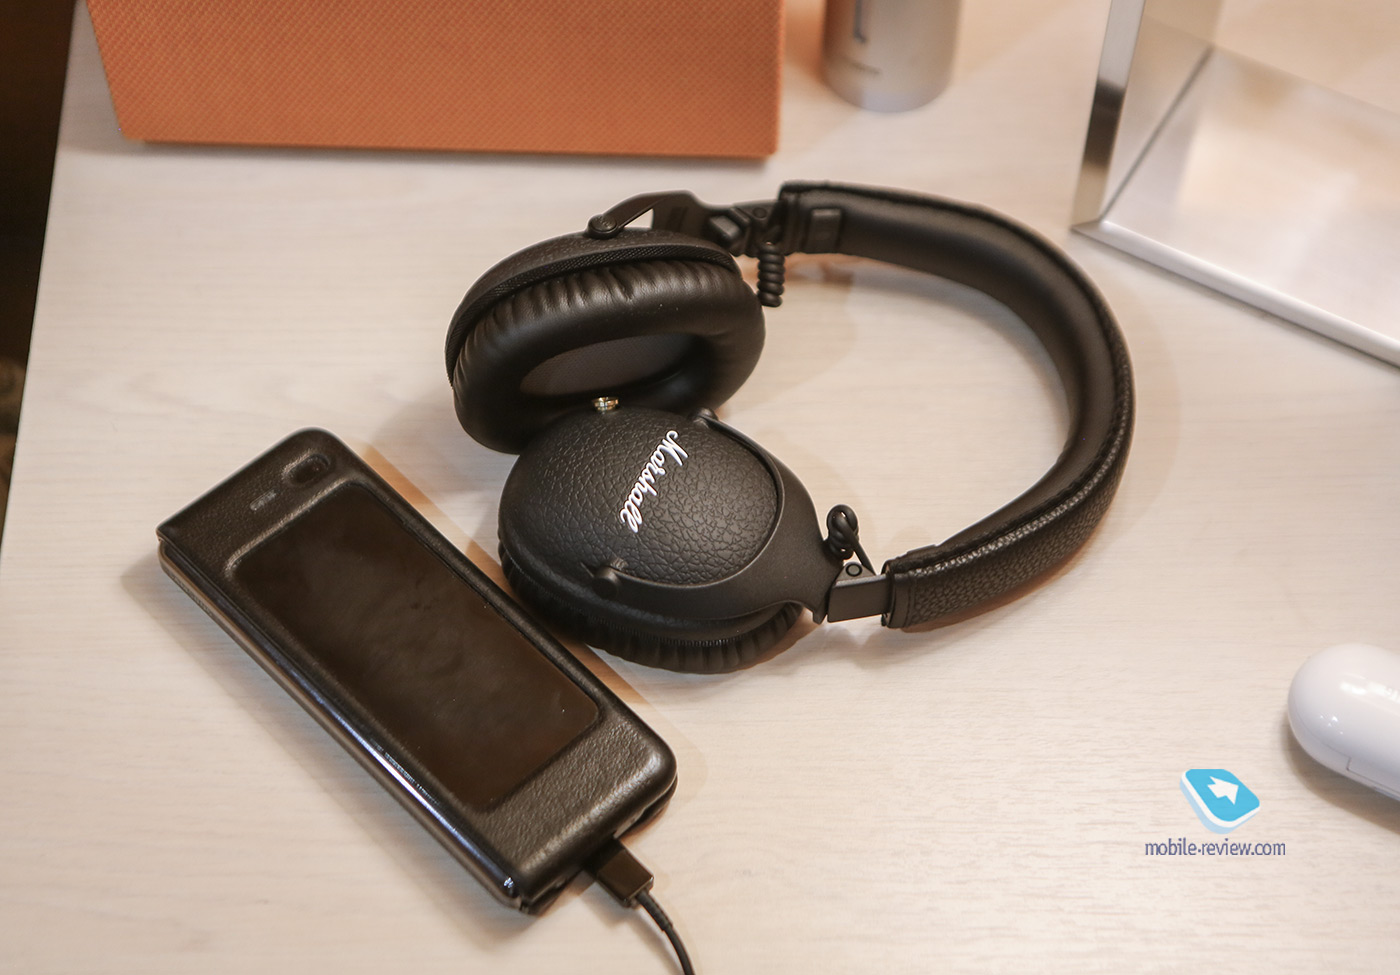 Marshall Monitor II ANC wireless headphones review